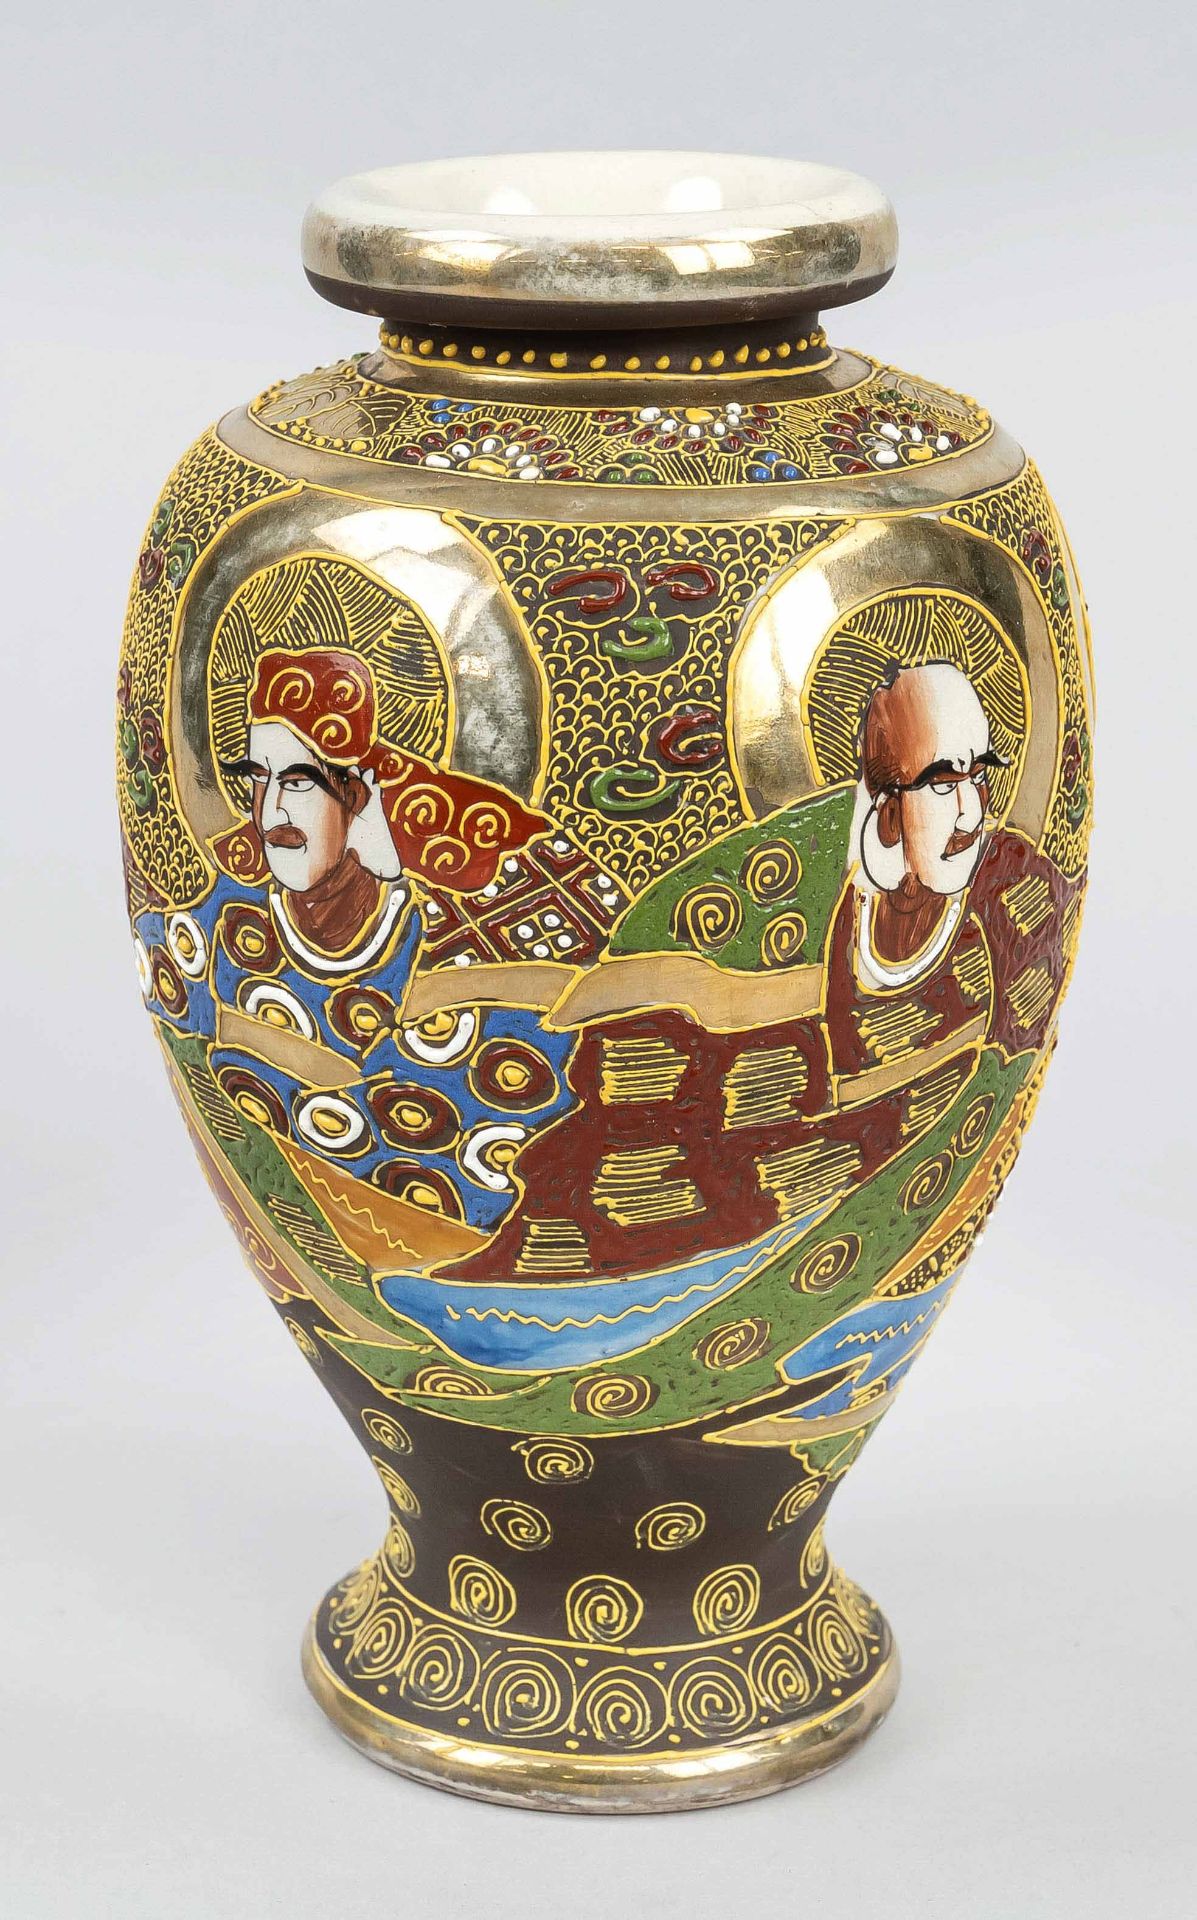 Satsuma vase with expressionistic decoration, Japan, 1920s, ivory porcelain with fine craquelé, rich - Image 2 of 4